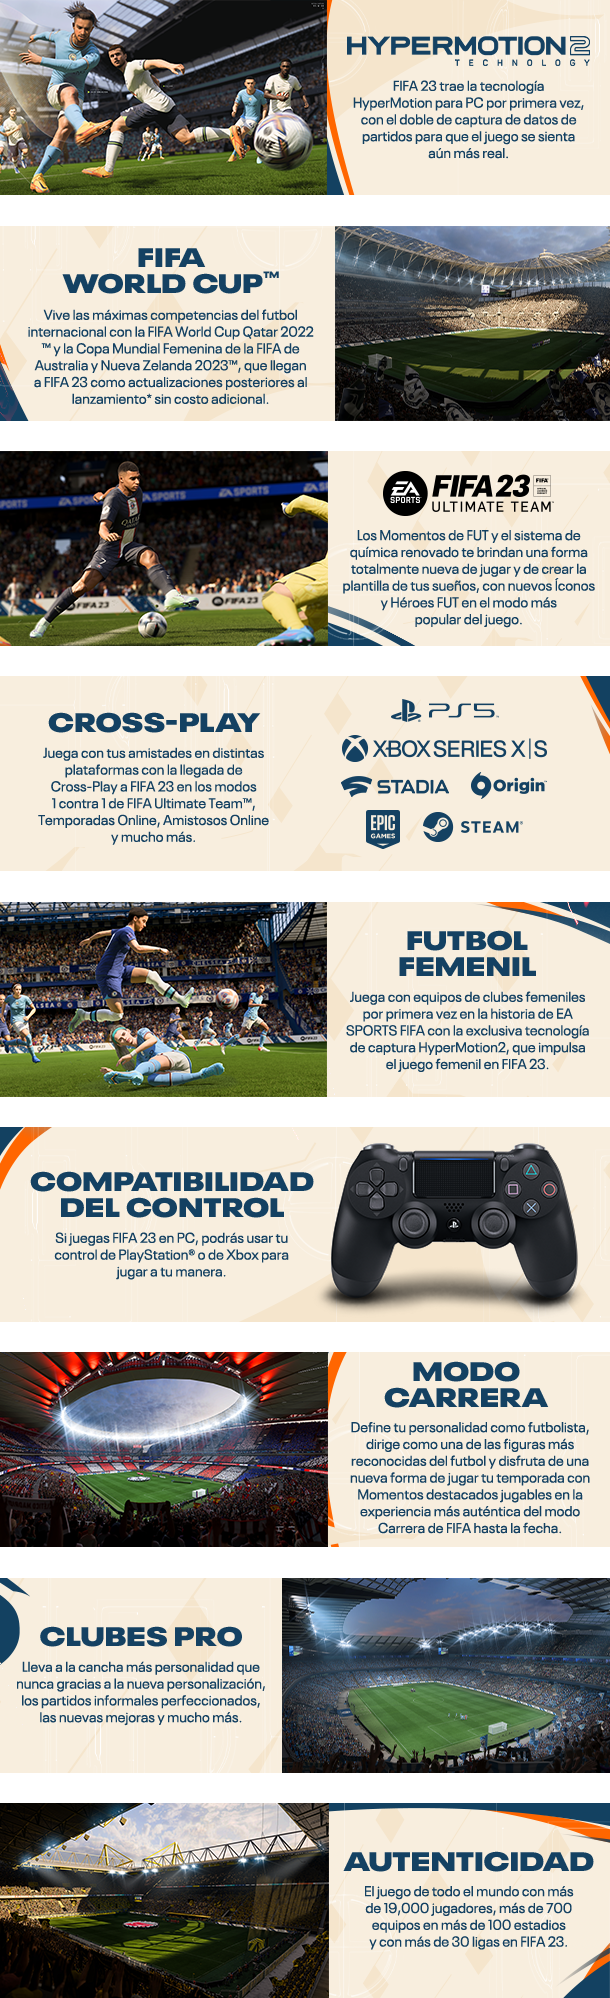 EA SPORTS™ FIFA 23 en Steam